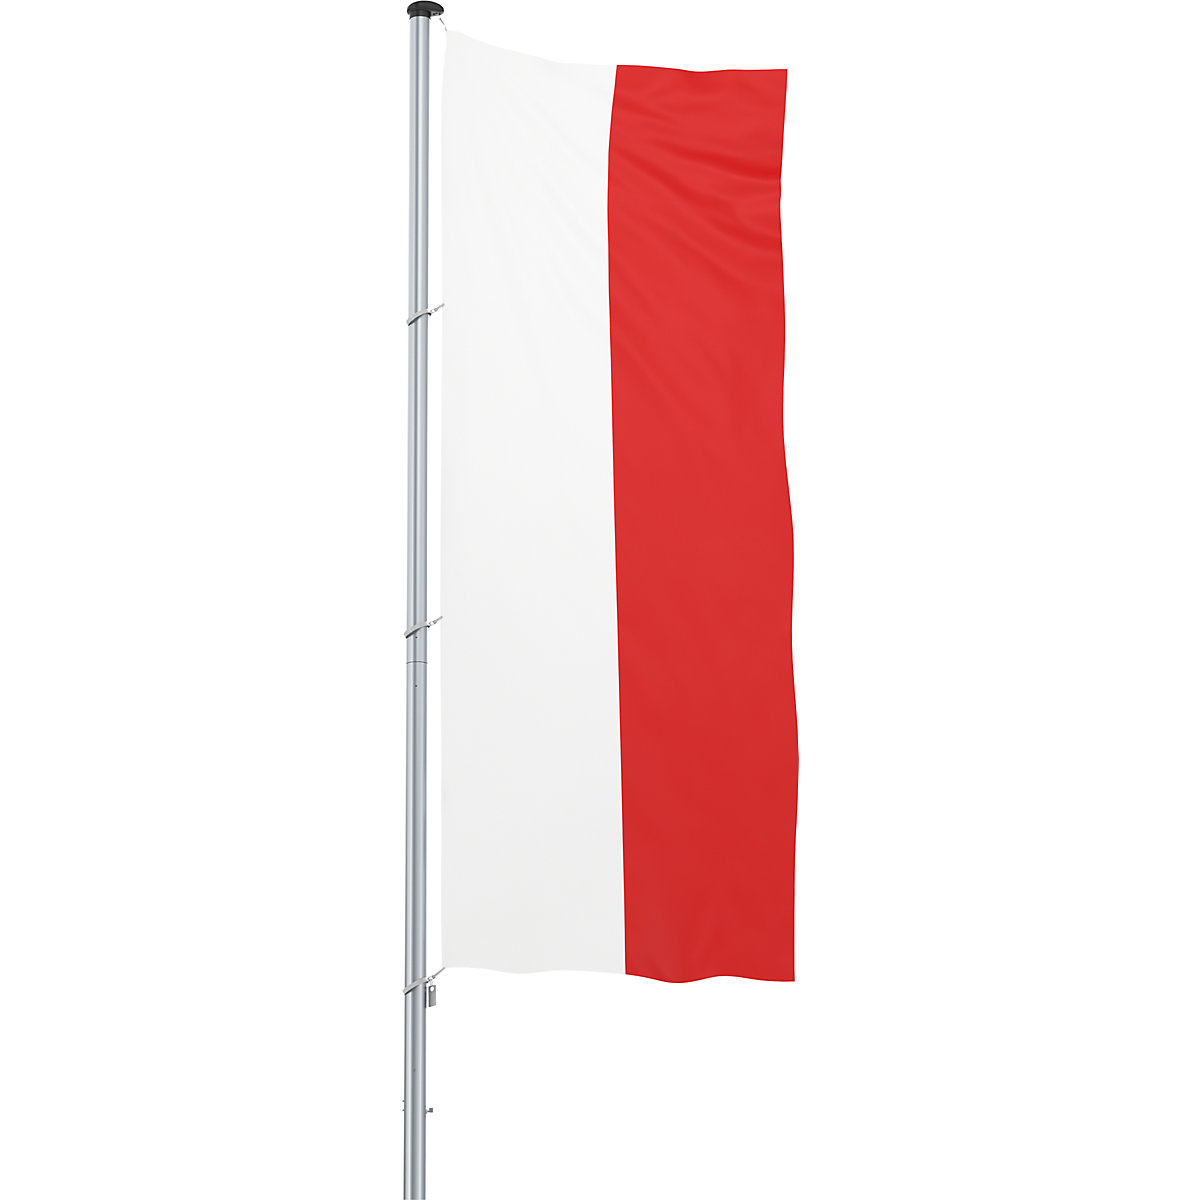 Zastava/nacionalna zastava – Mannus, format 1,2 x 3 m, Poljska